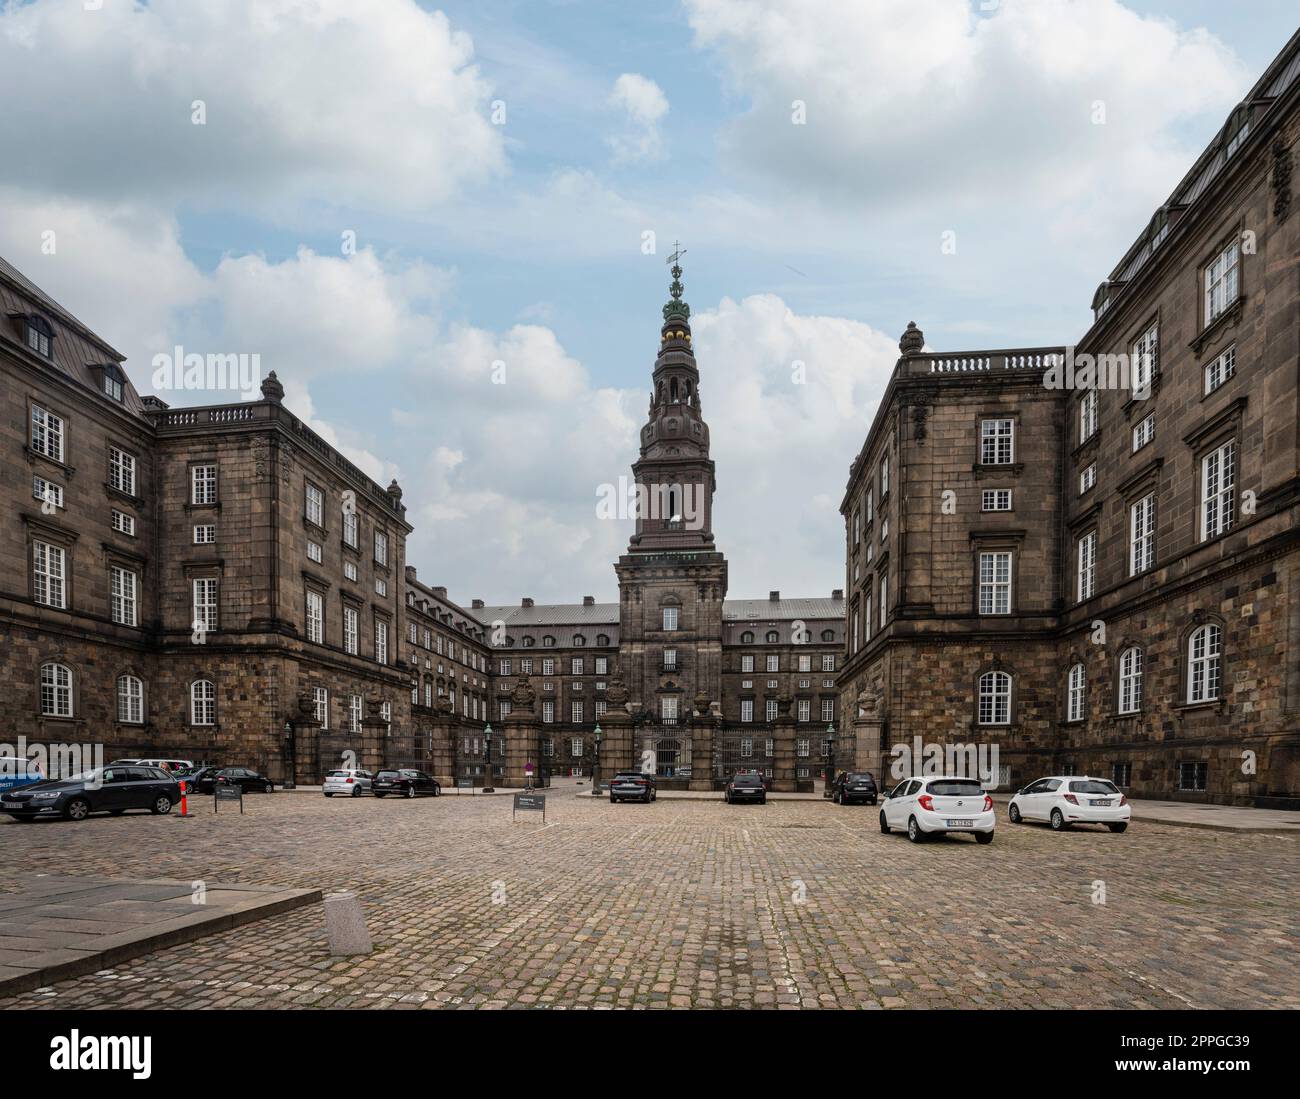 Christiansborg Palace in Copenhagen, Denmark Stock Photo - Alamy